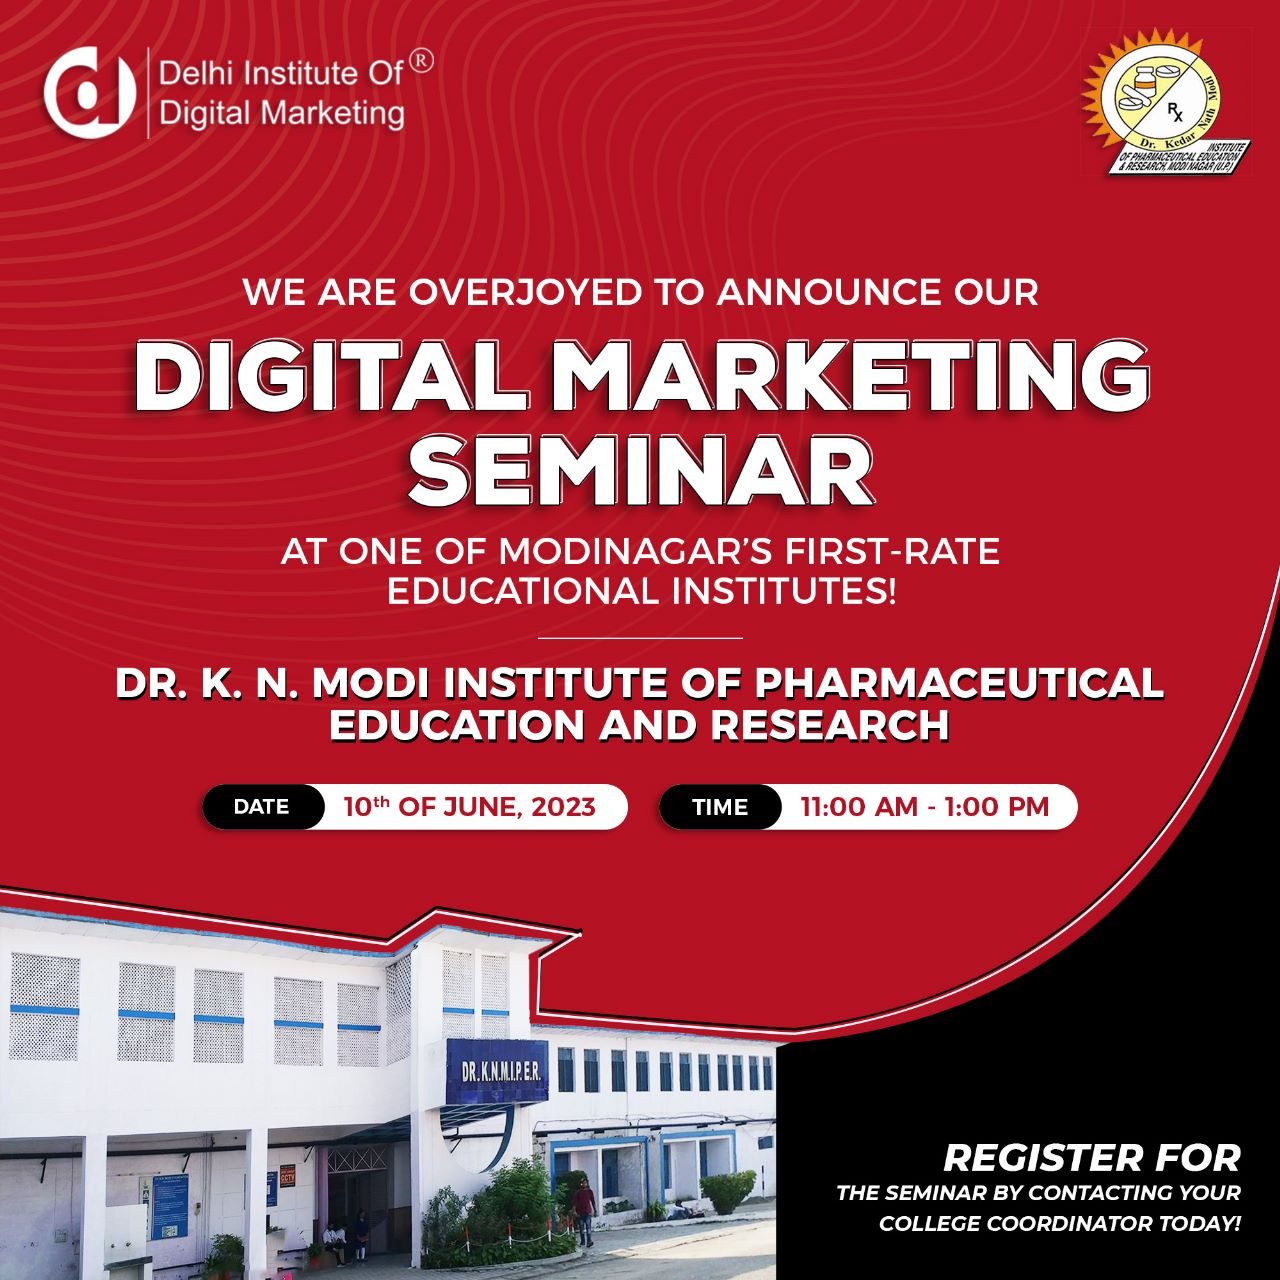 DIDM Conducts digital marketing seminar at Dr. K. N. Modi Institute